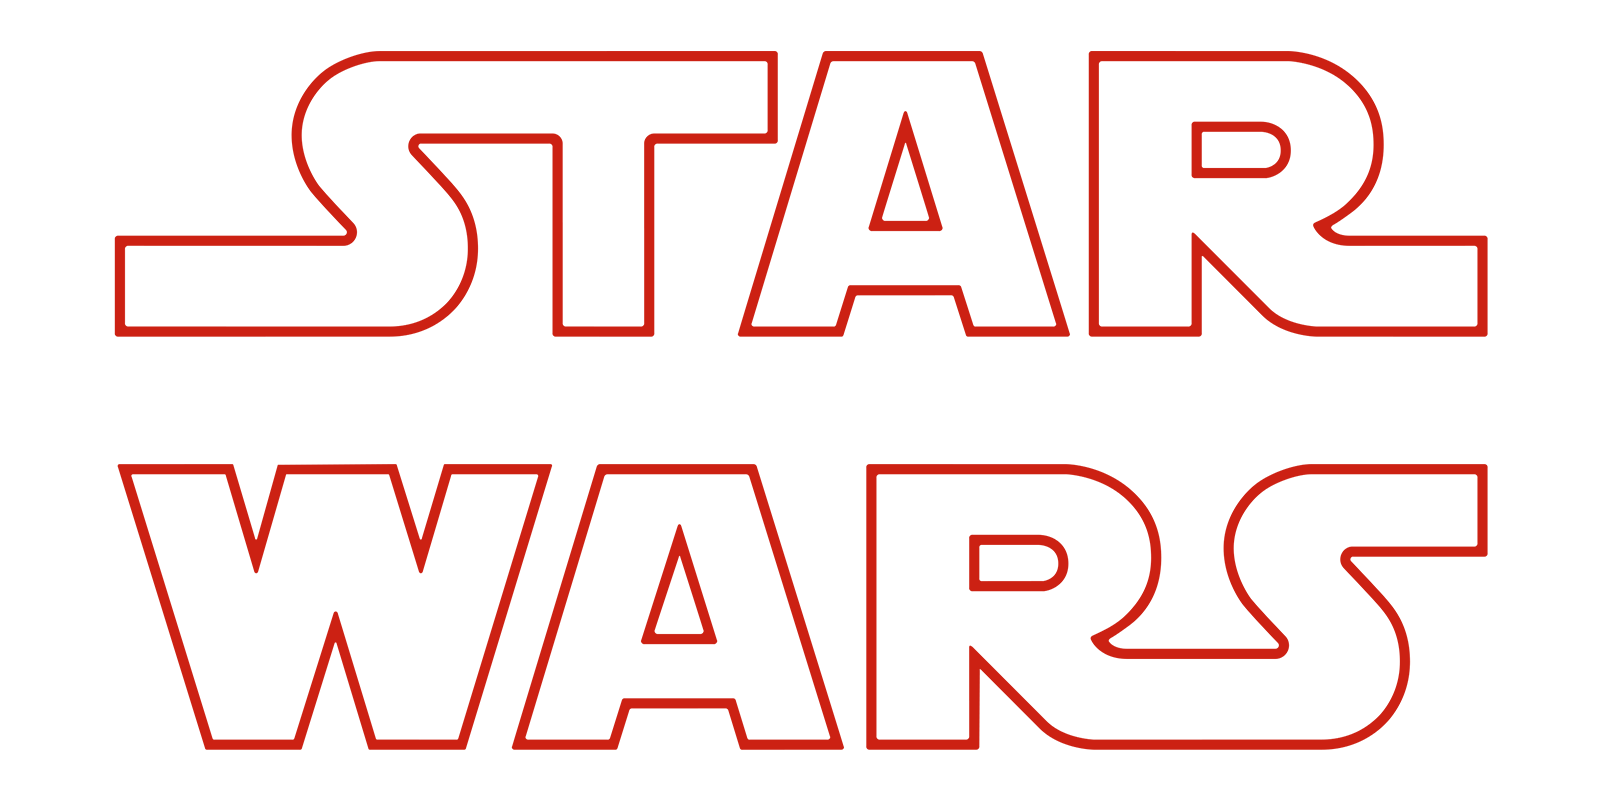 star wars the last jedi full movie sub indo